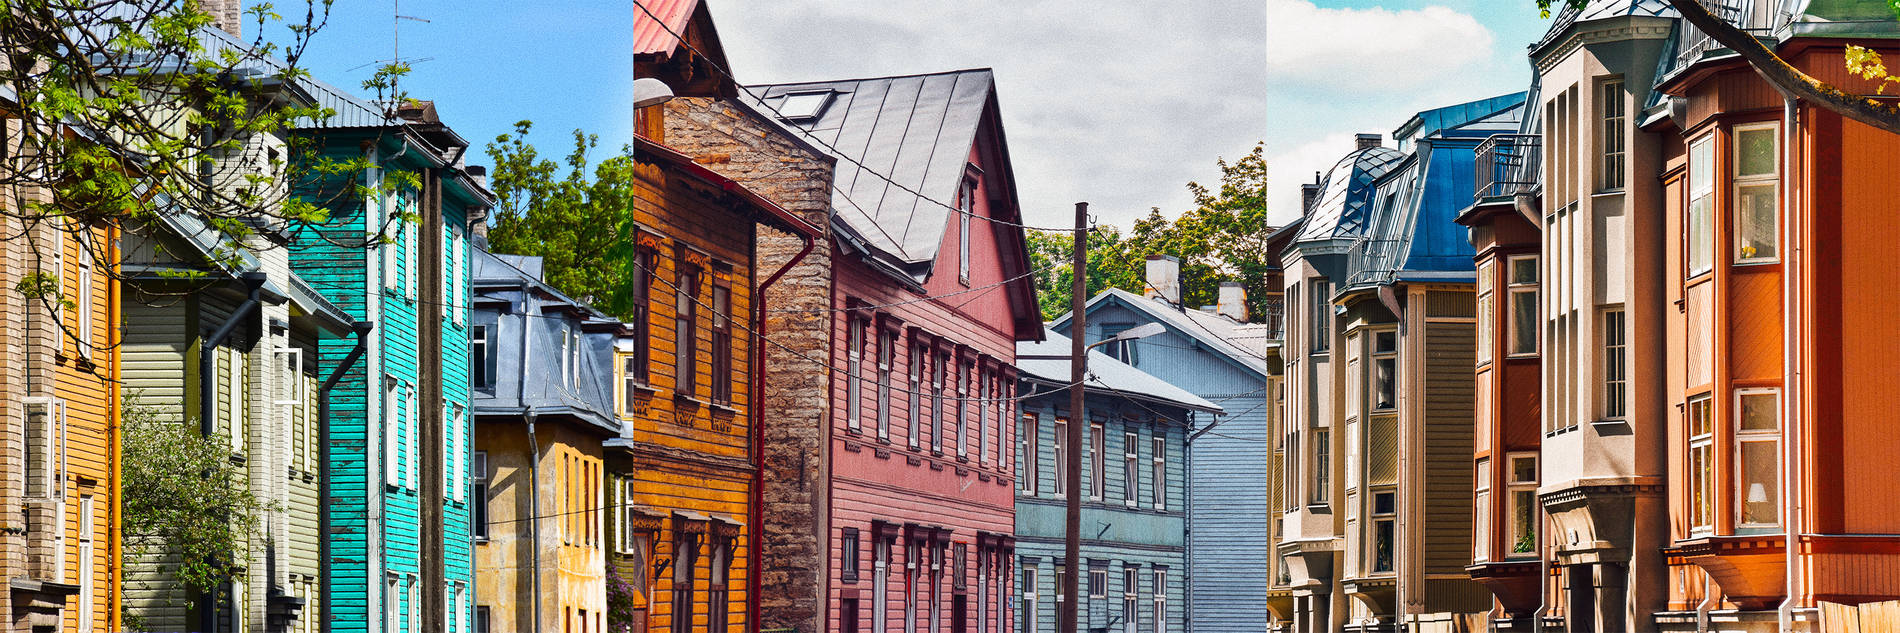 Kalamaja's colourful wooden houses in Tallinn, Estonia Photo: 